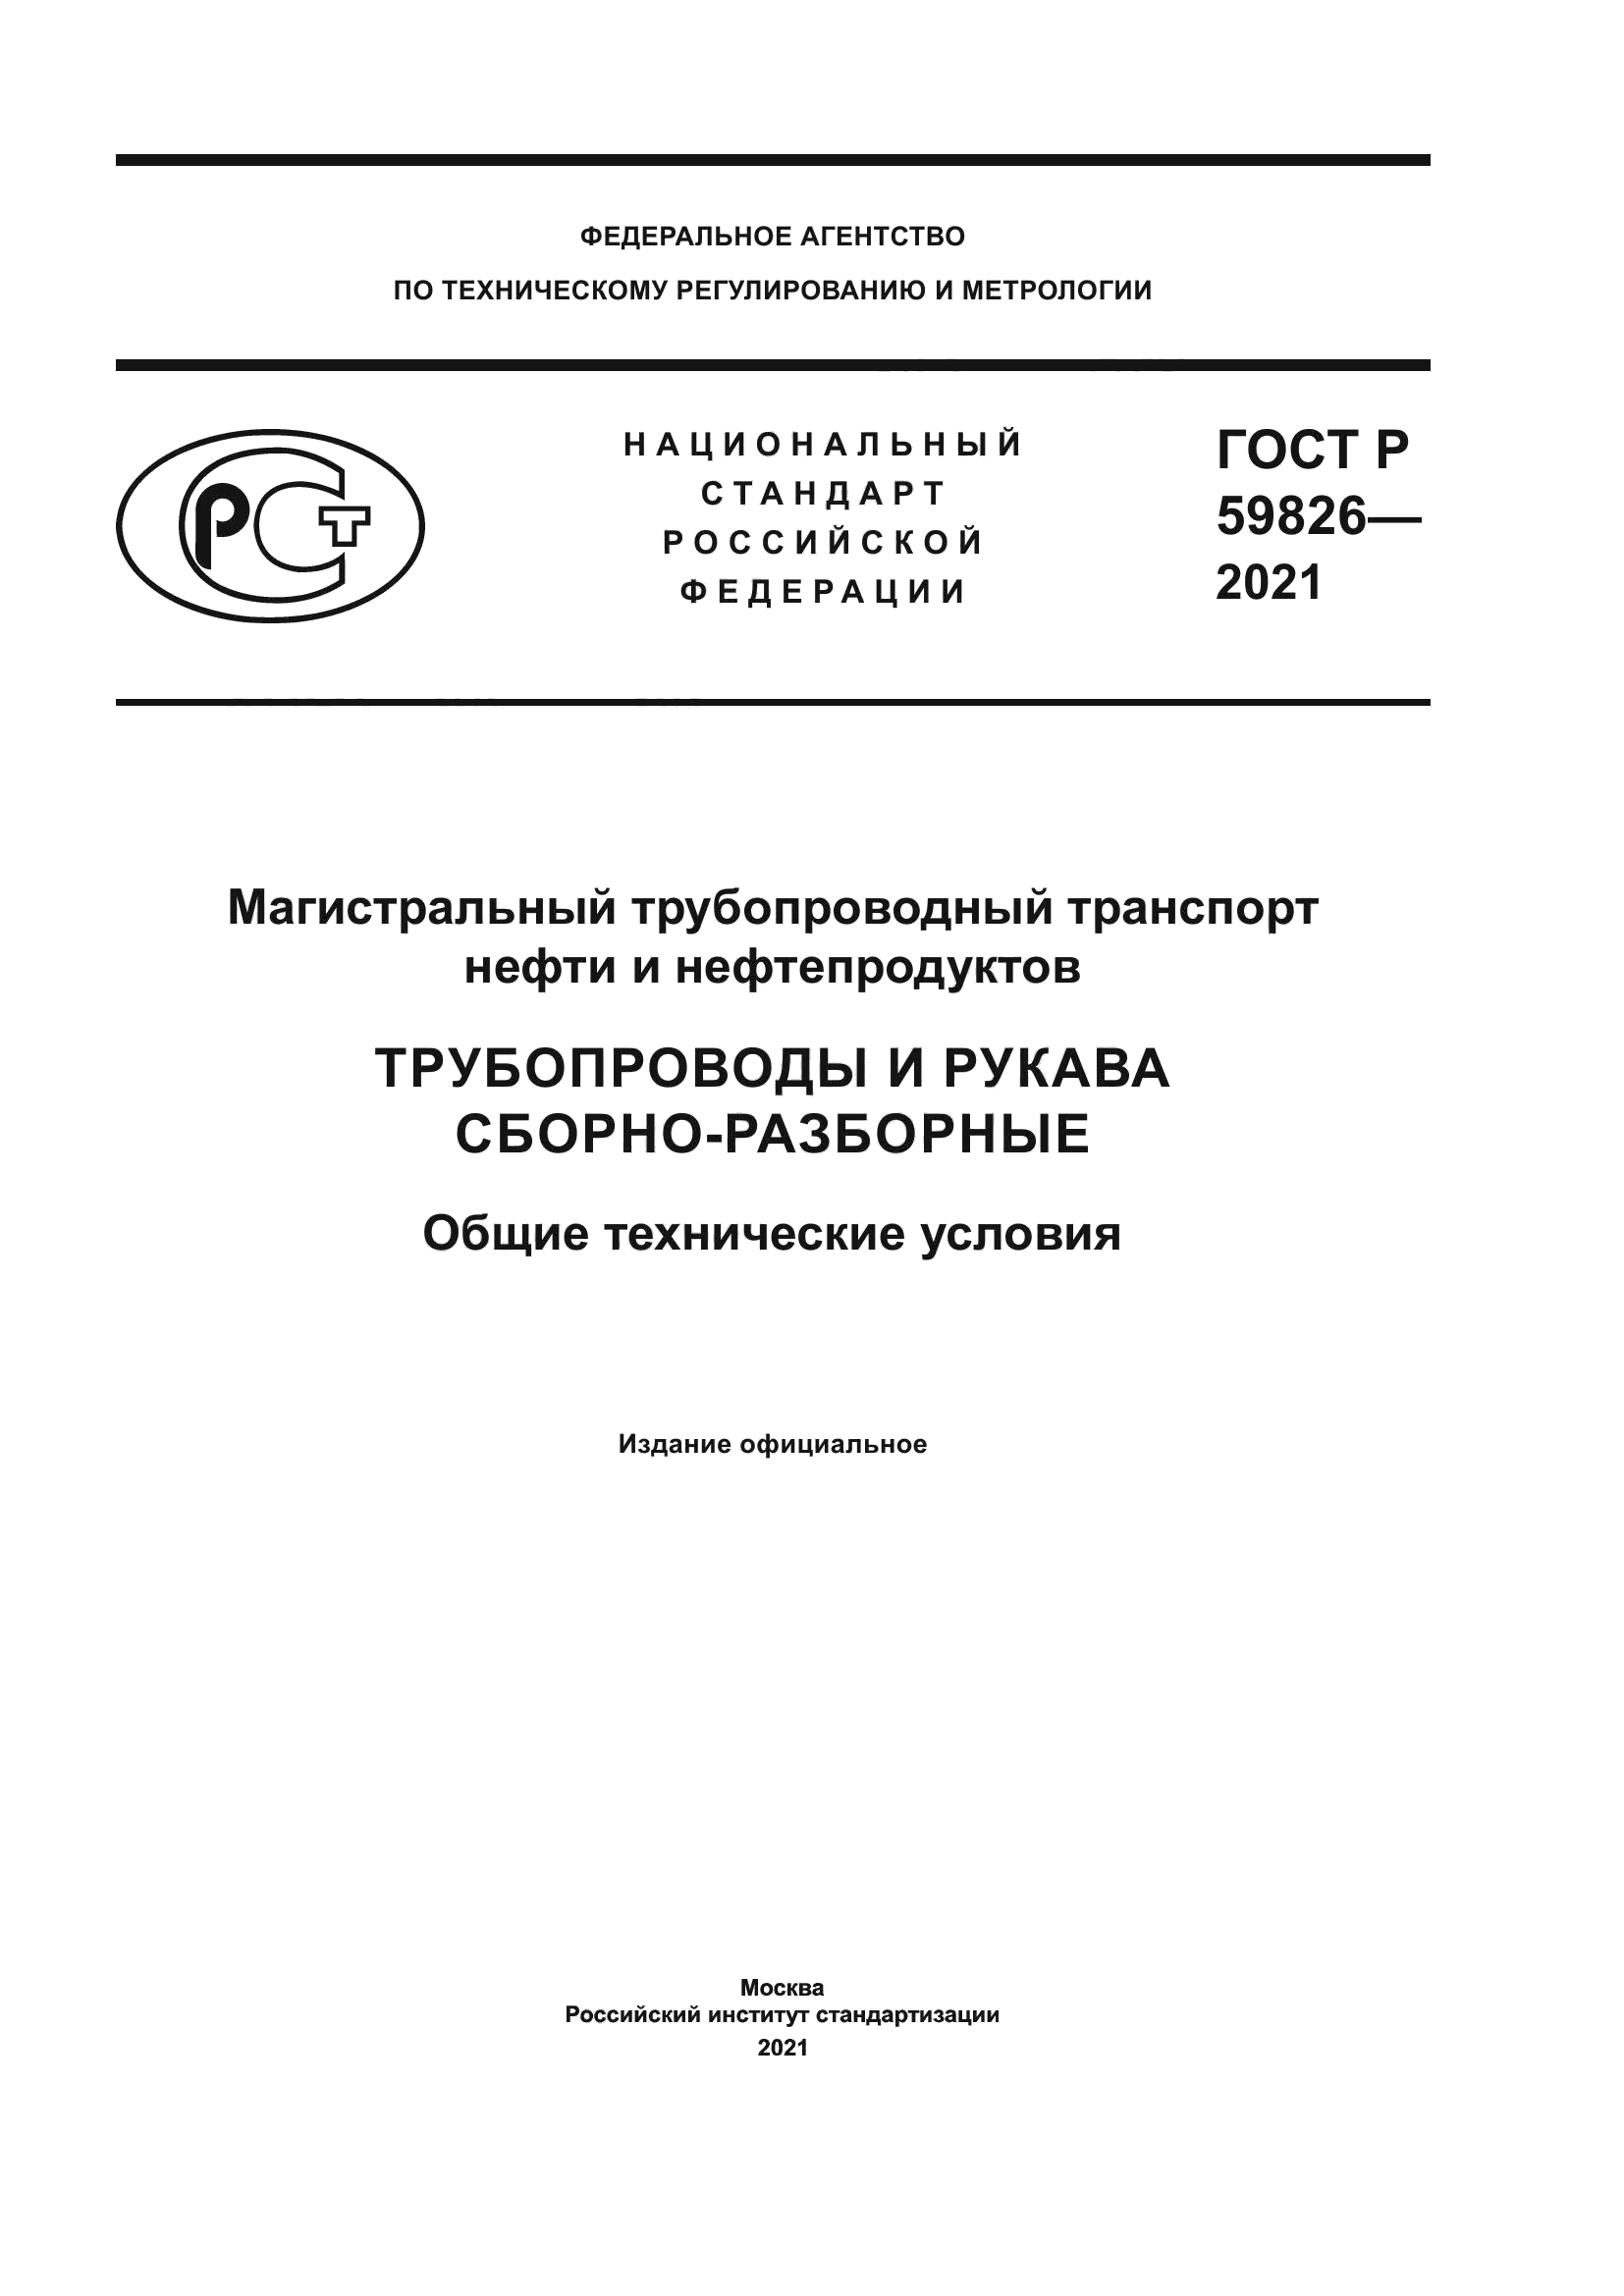 ГОСТ Р 59826-2021